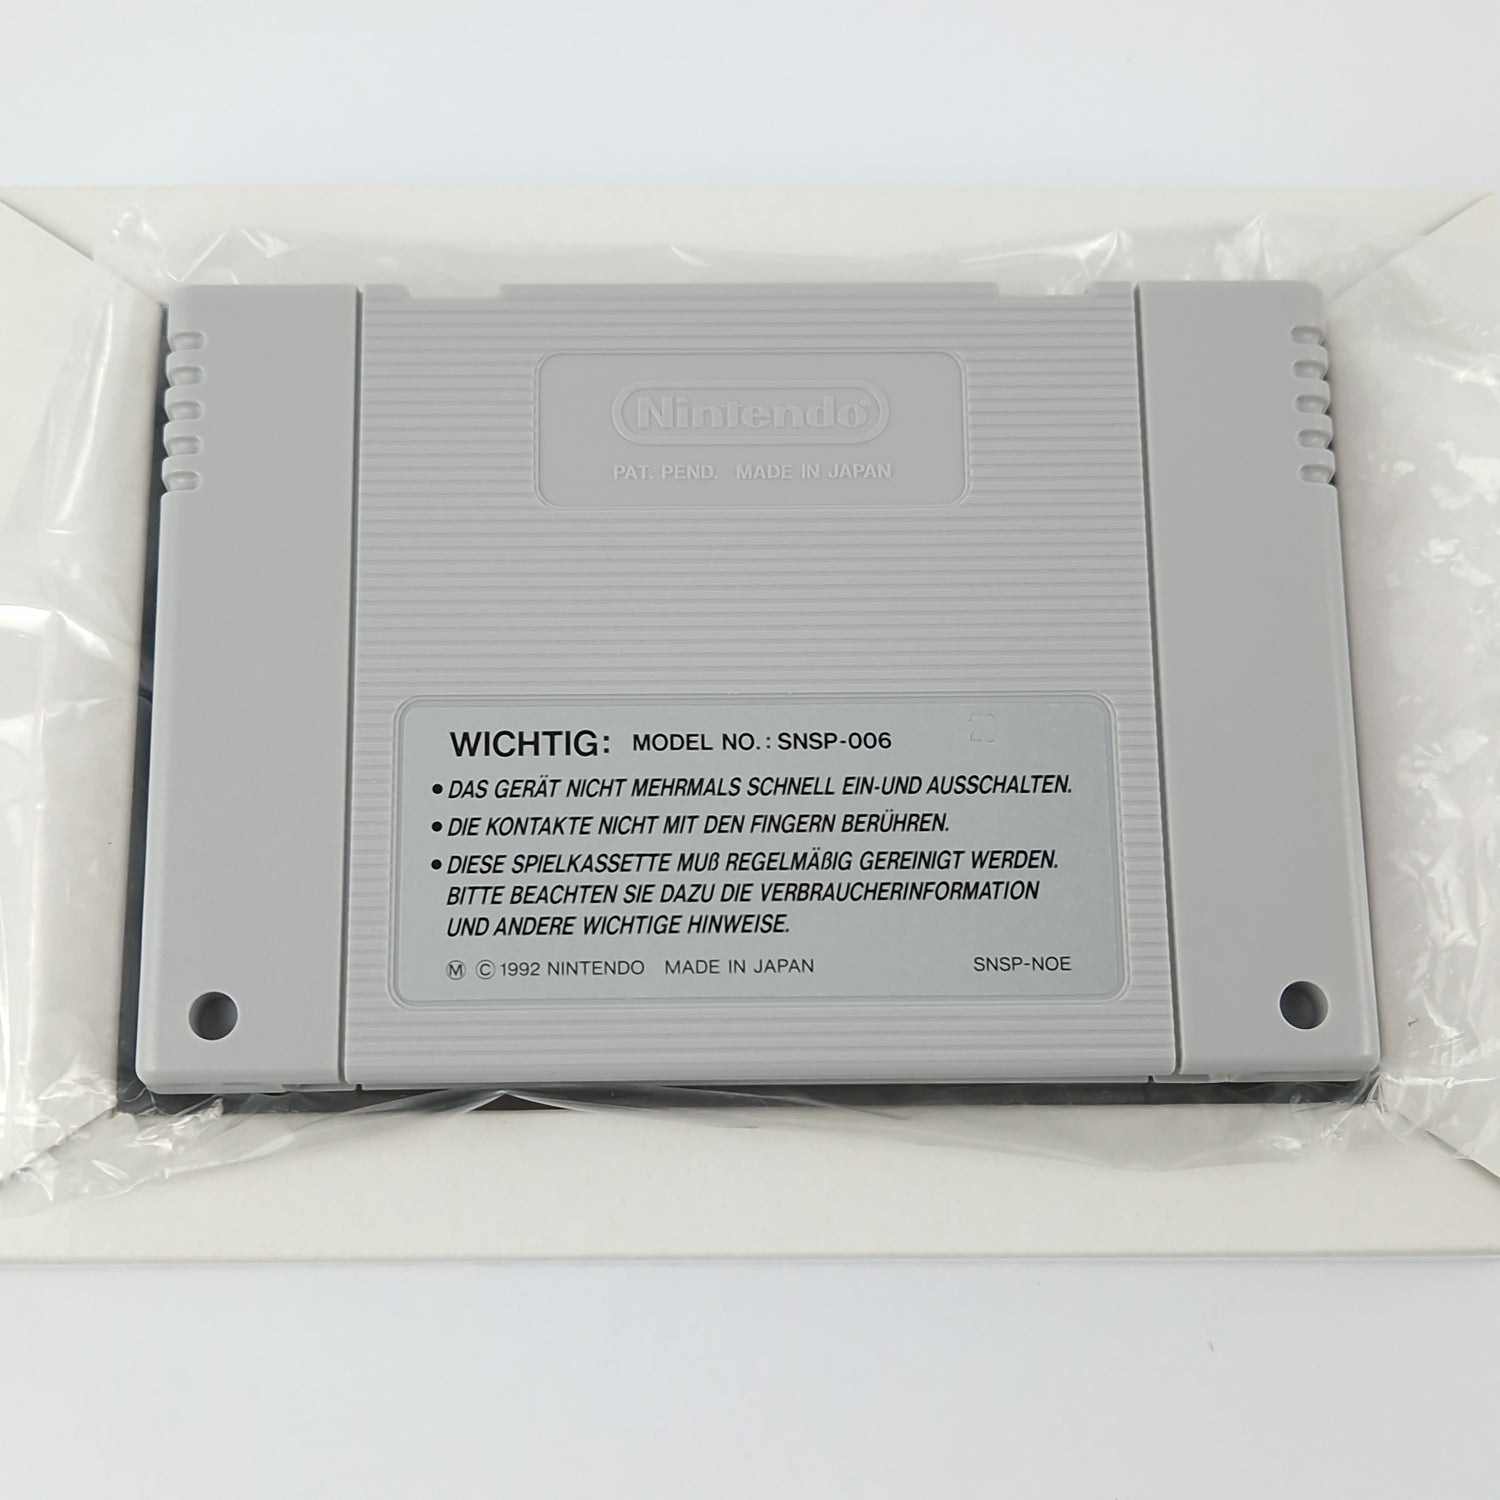 Super Nintendo Game: Chuck Rock - Module Instructions OVP cib | SNES PAL NOE